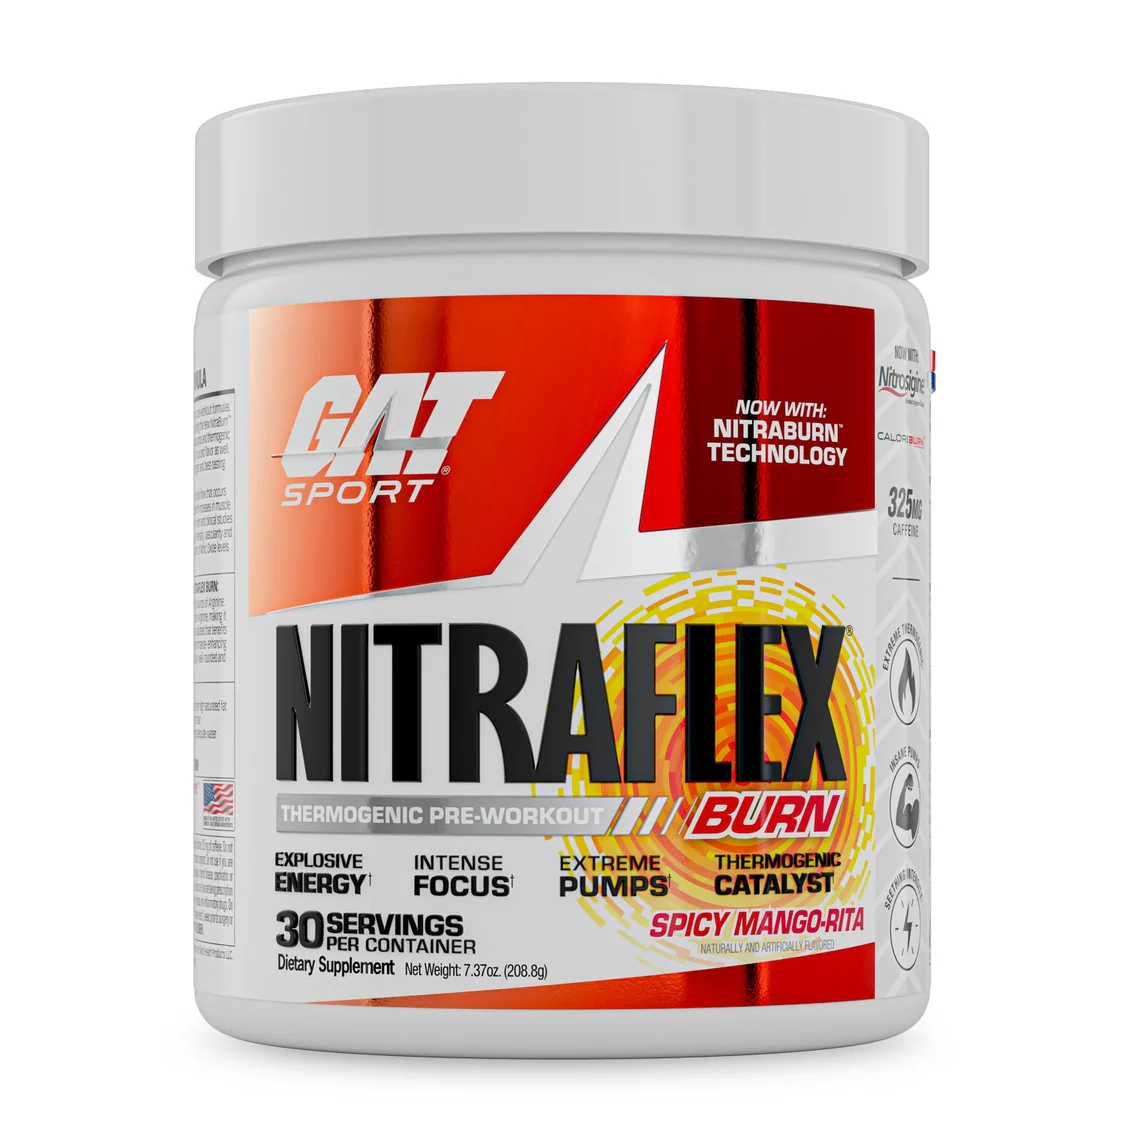 Gat Sport Nitraflex Thermogenic Pre-Workout